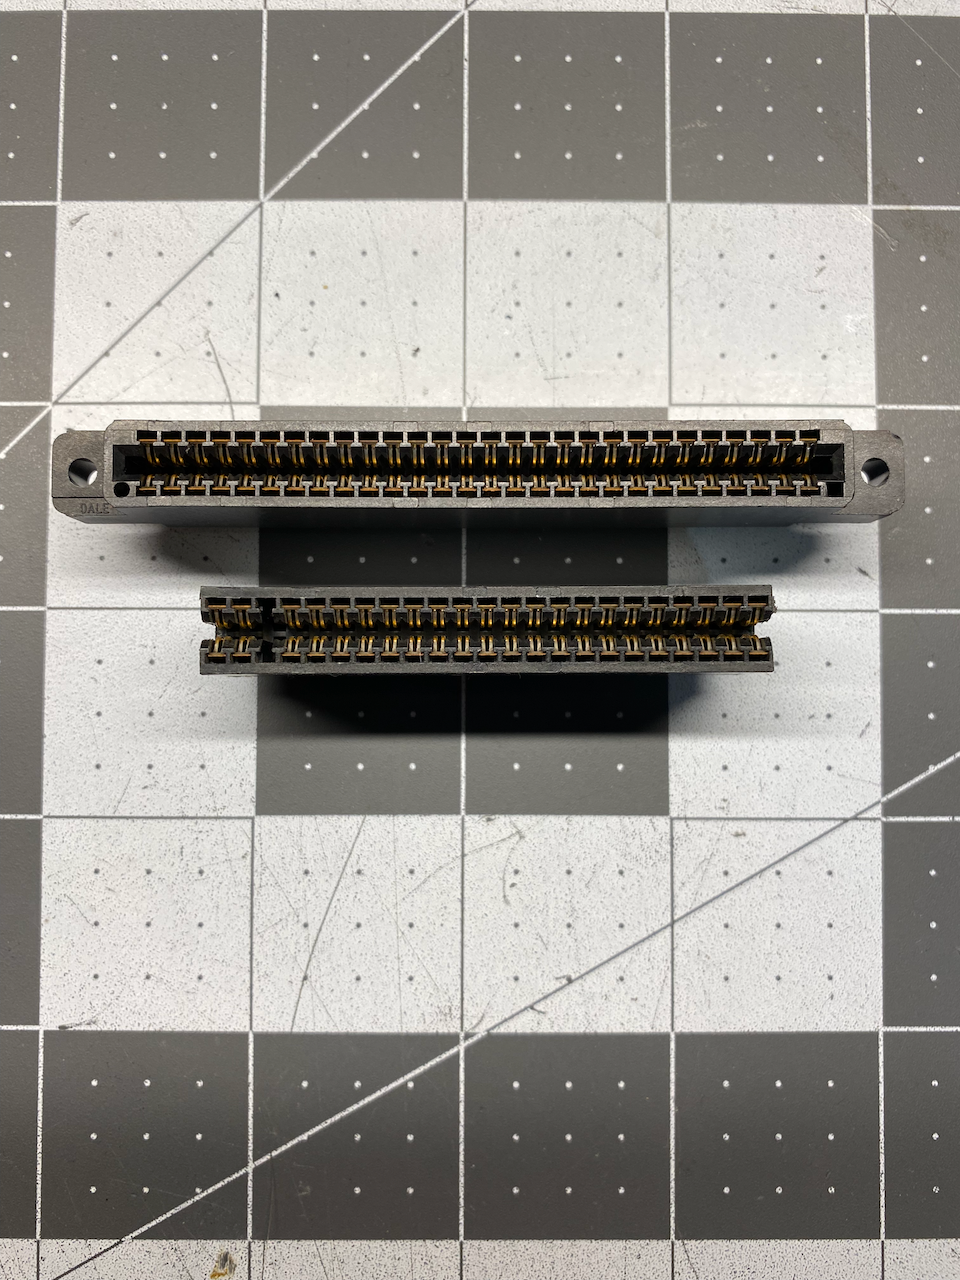 ZX81/TIMEX-SINCLAIR 1000 - DIY Breakout Board